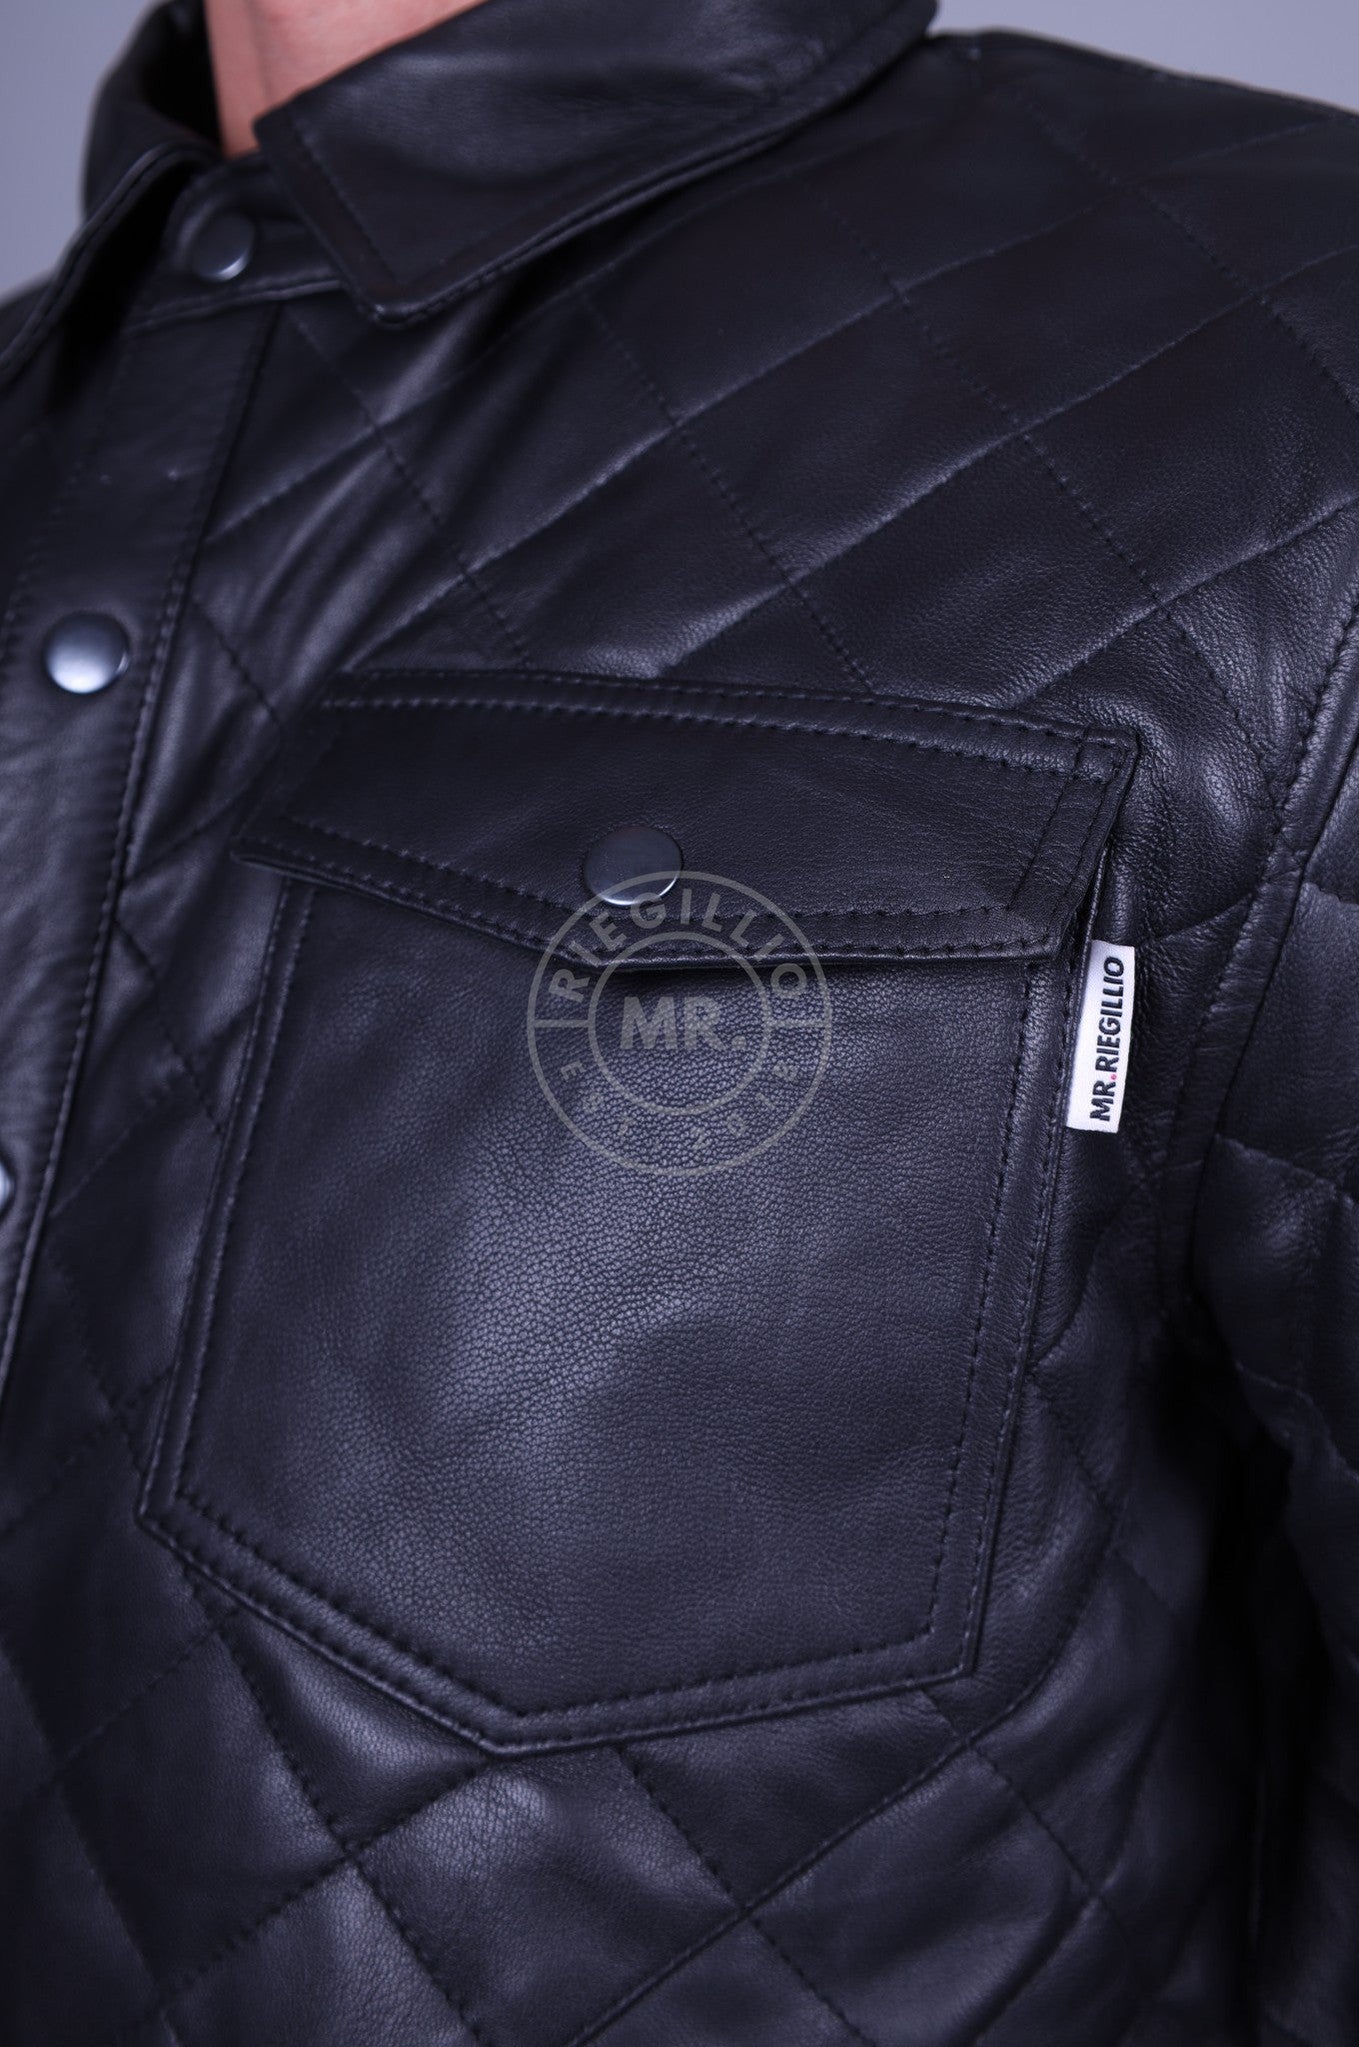 Black Leather Padded Long Sleeve Shirt at MR. Riegillio